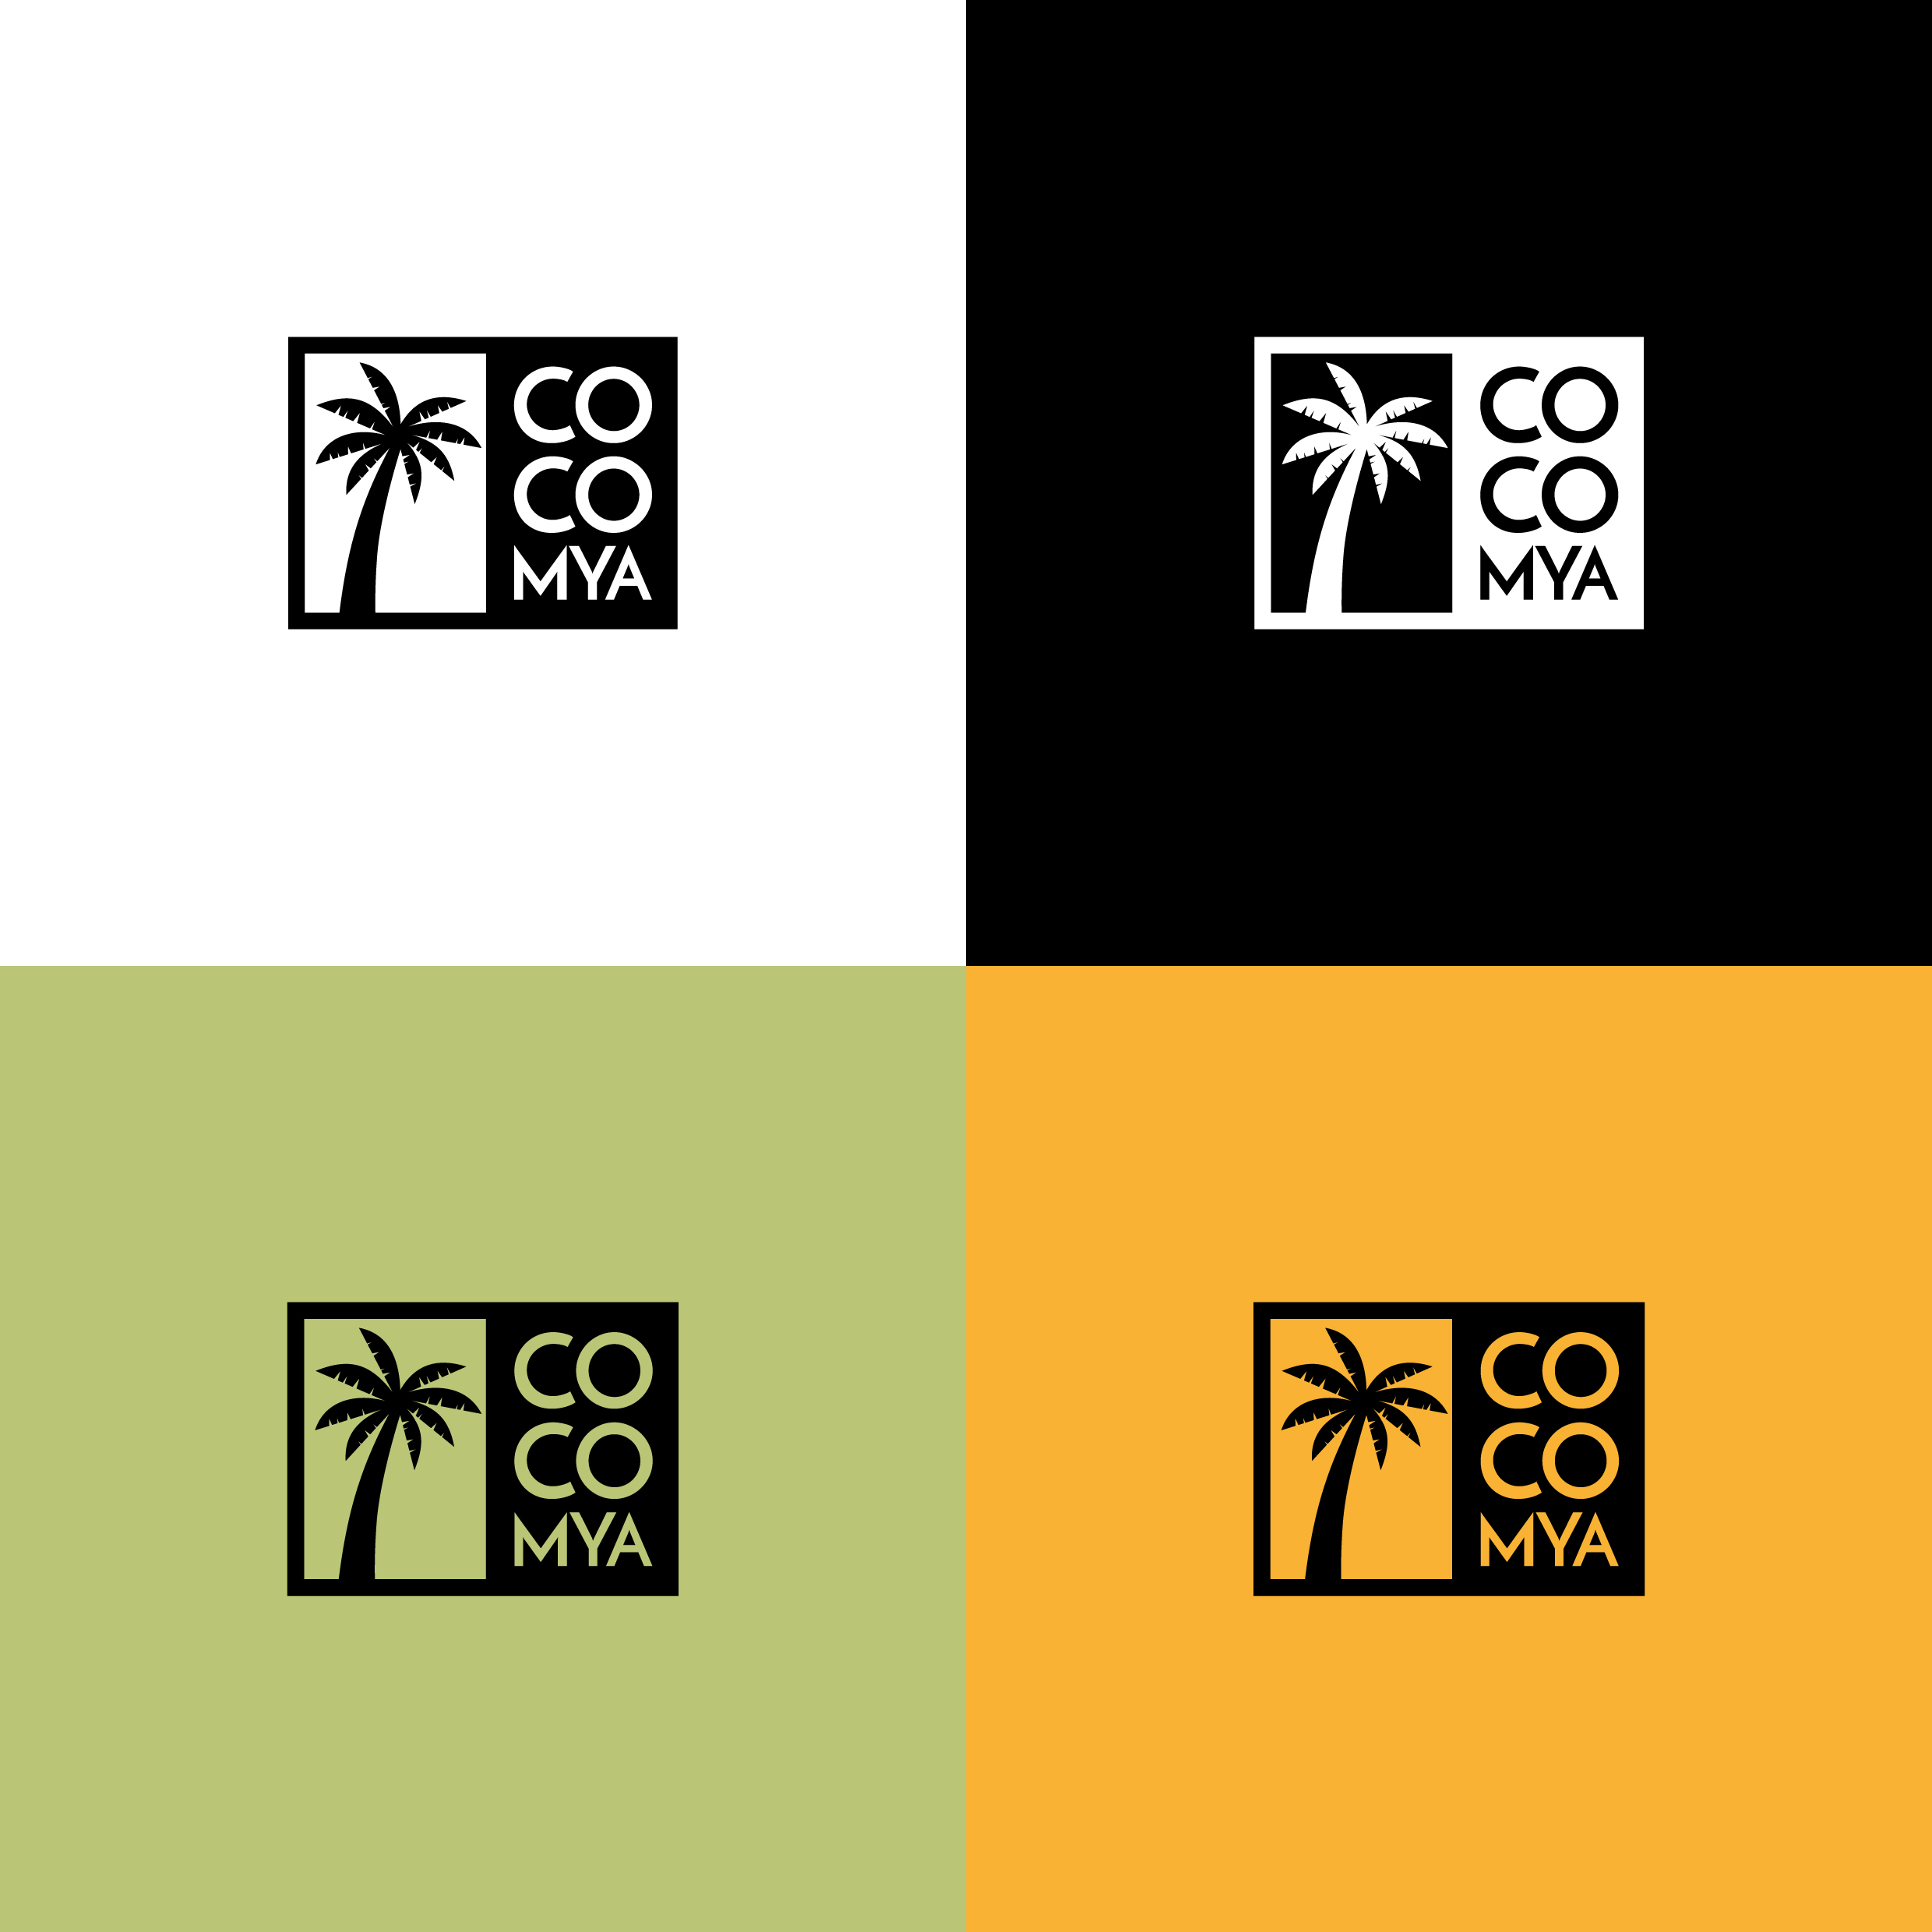 Logo Cocomya